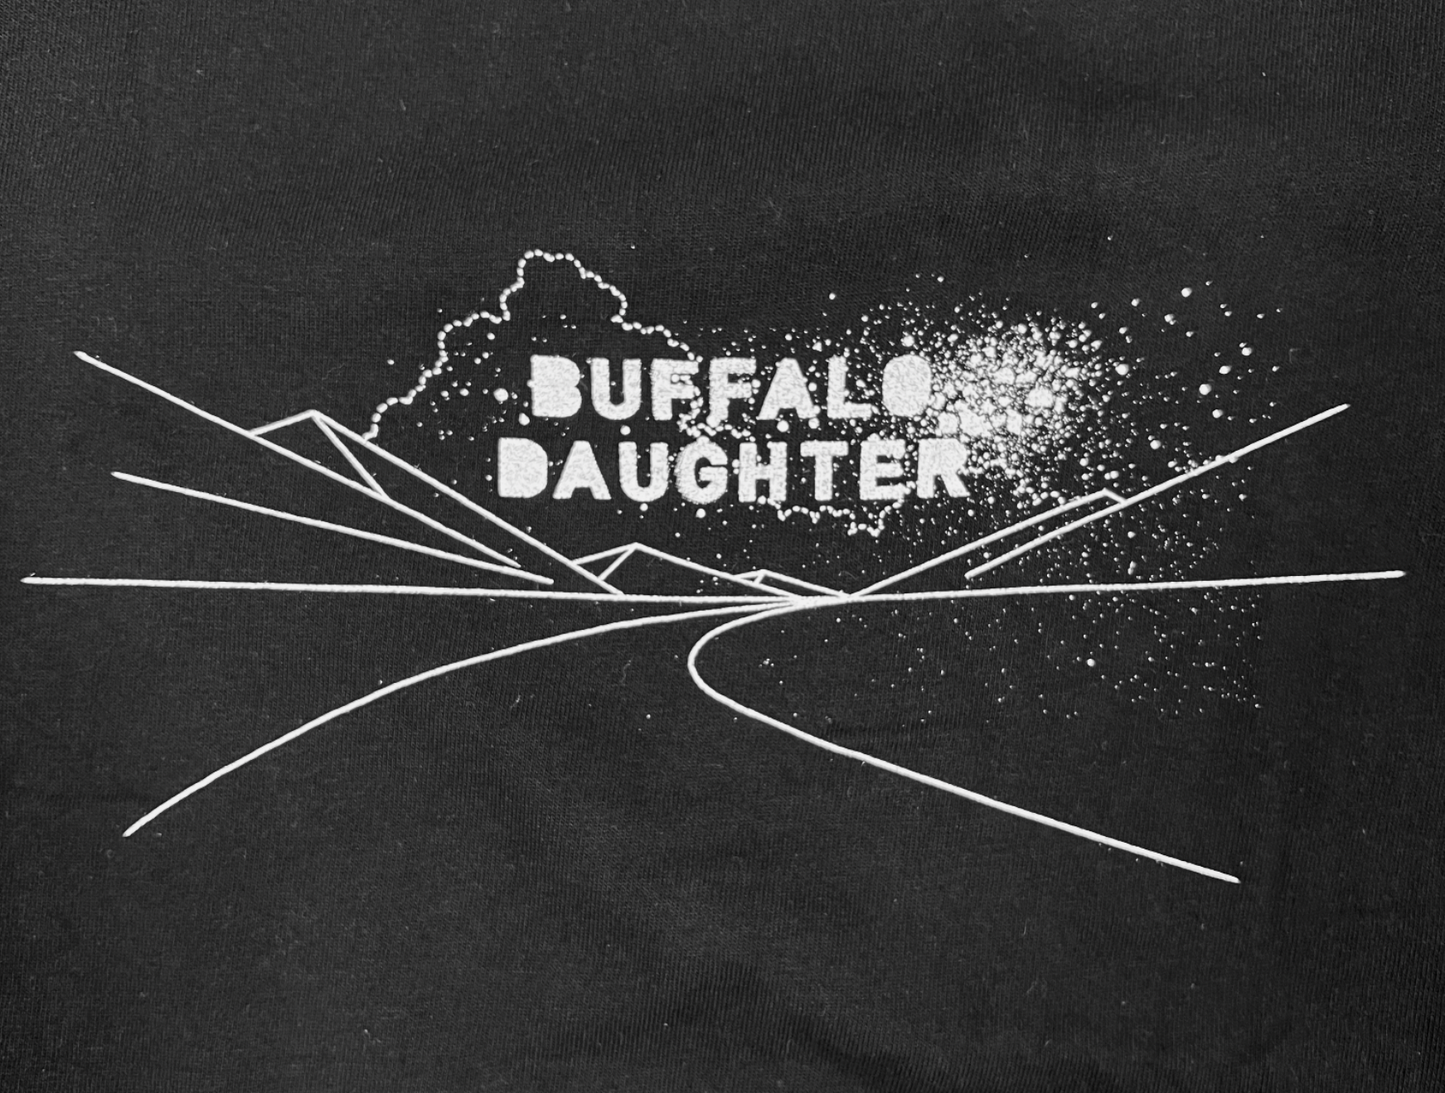 Buffallo Daughter 「New Rock 25周年記念」 Tシャツ（art work by Keiji Ito）